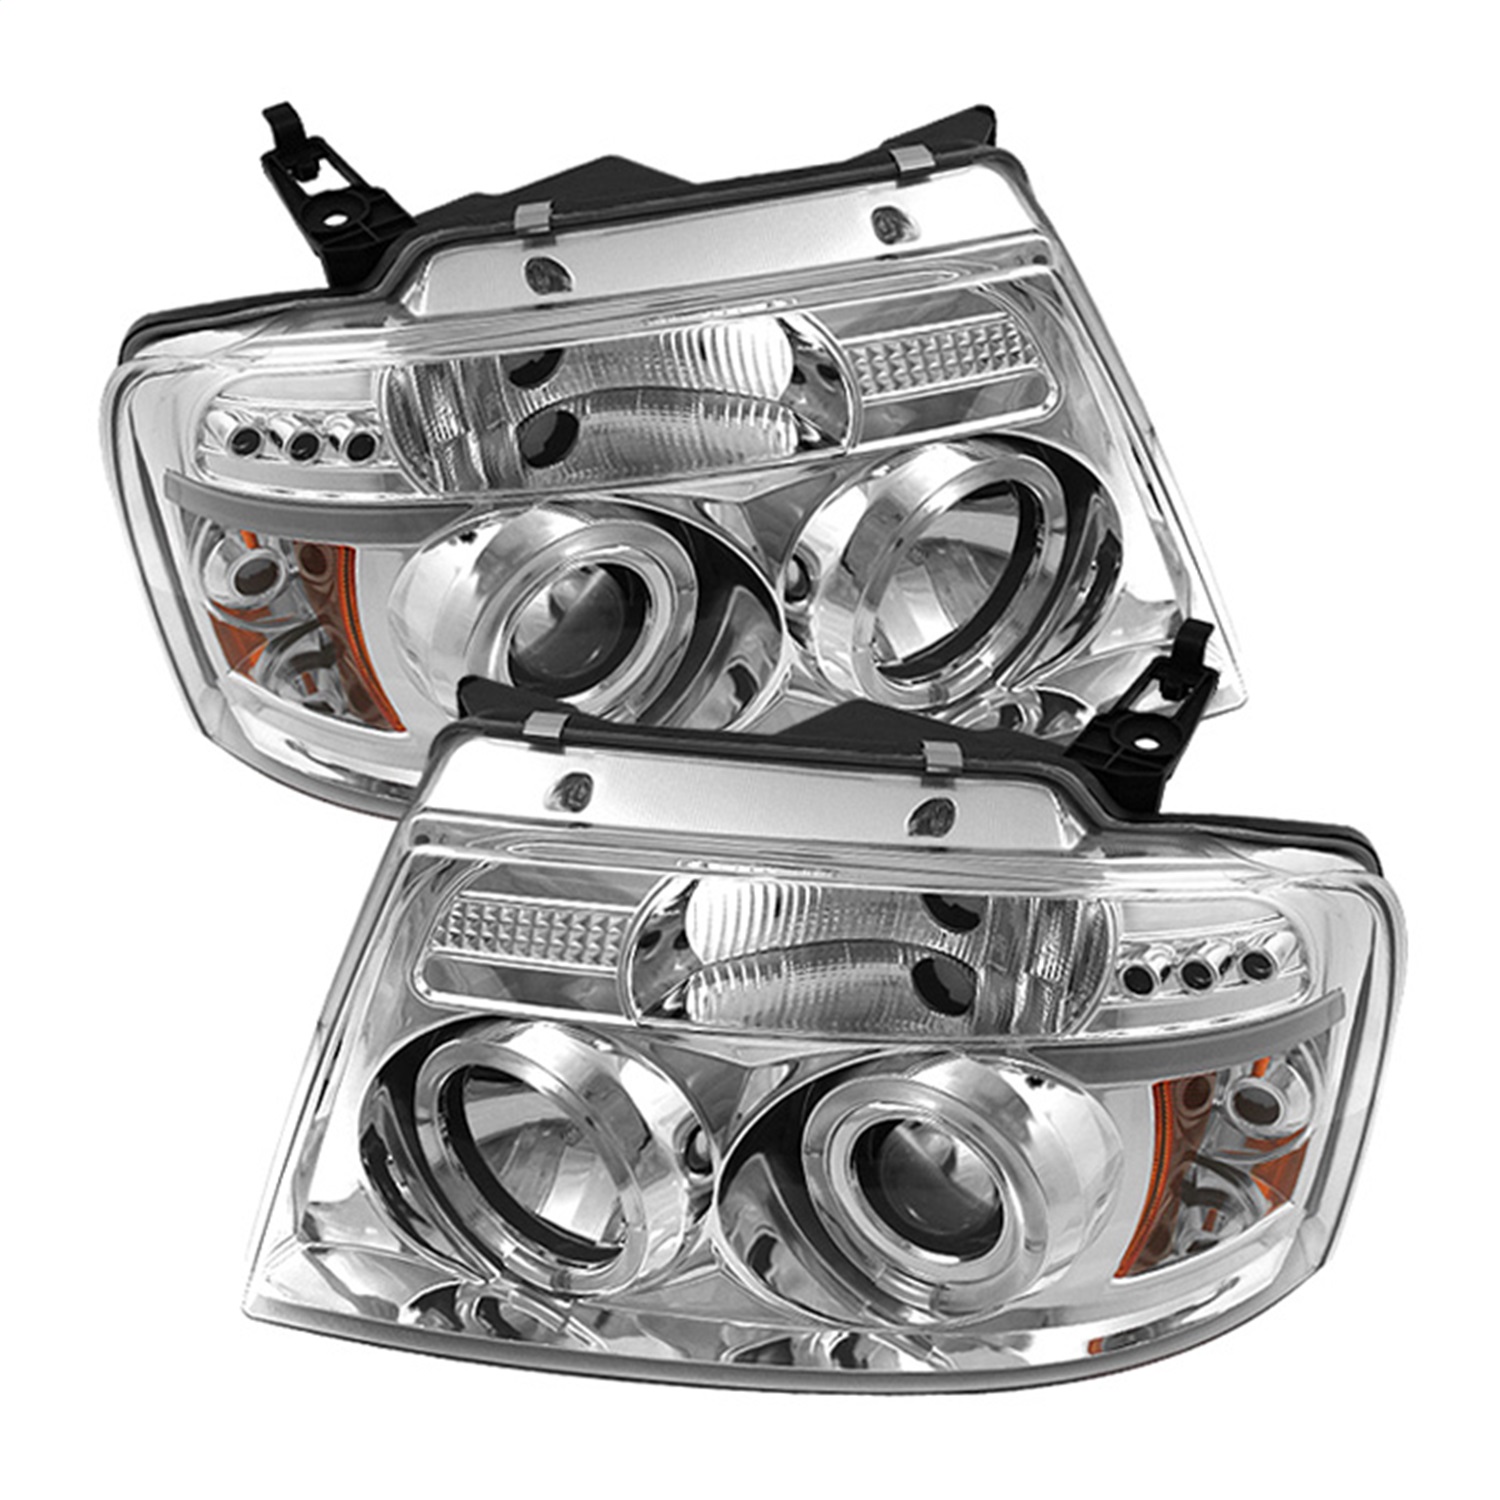 Spyder Auto 5010216 Halo LED Projector Headlights Fits 04-08 F-150